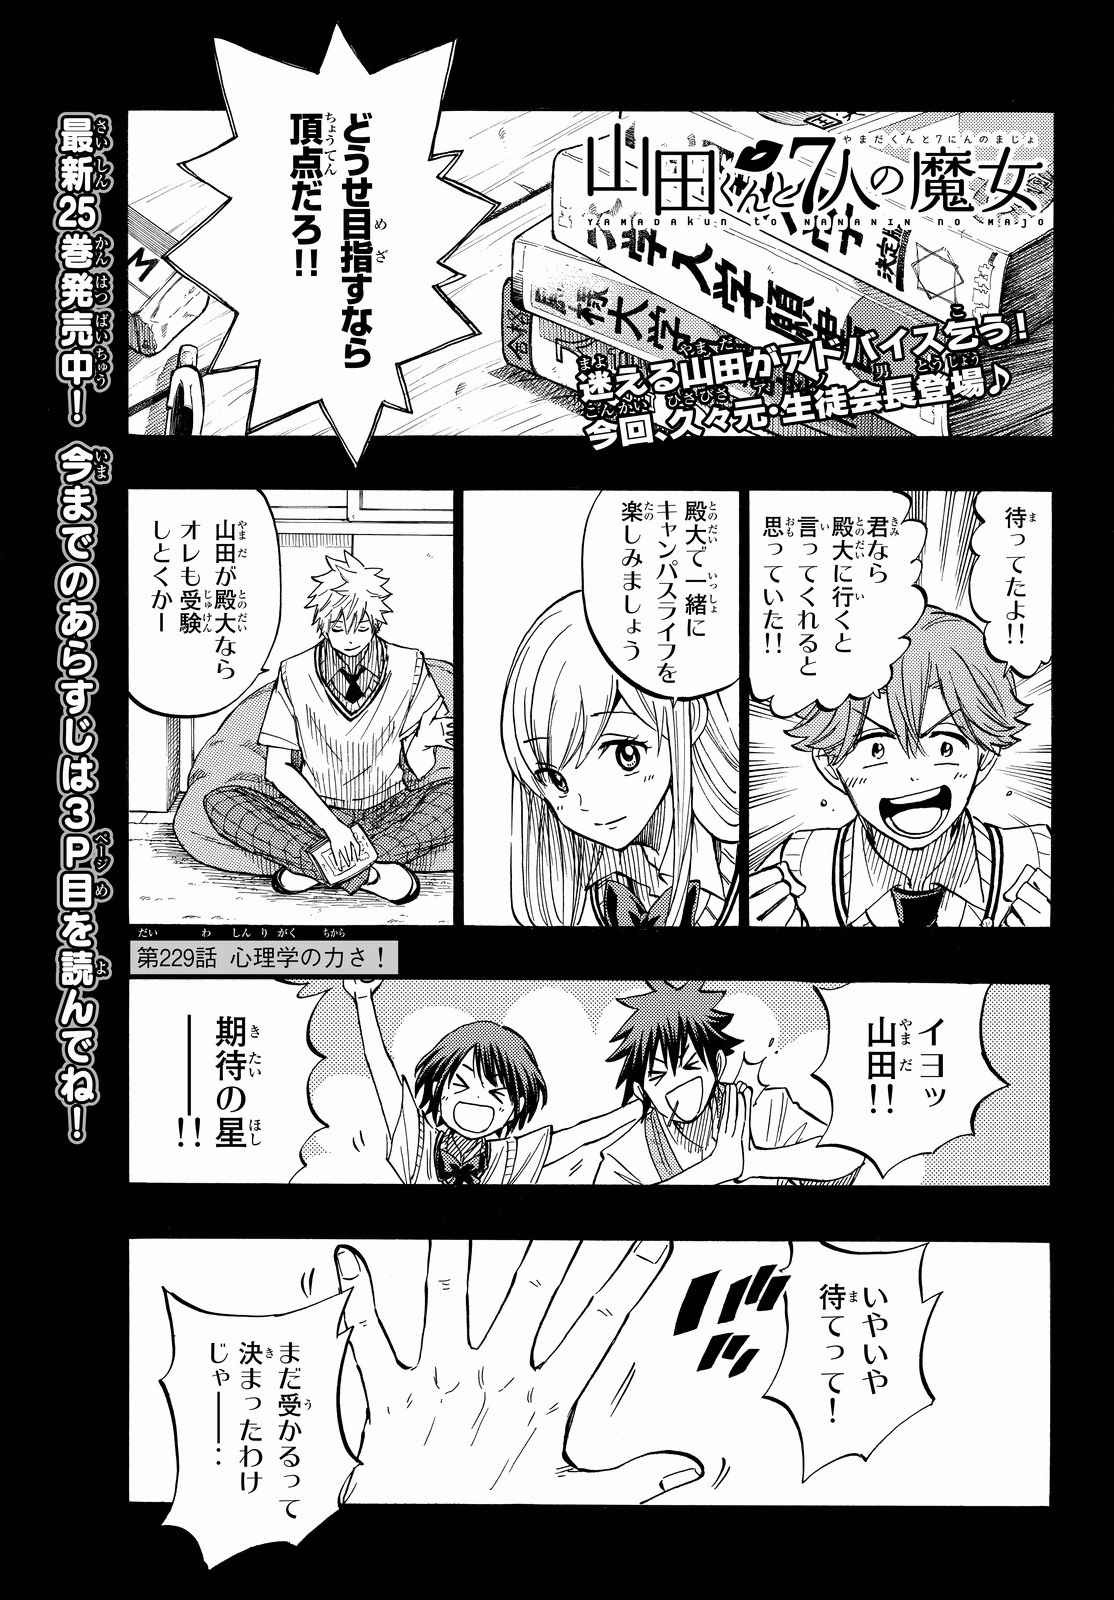 Yamada-kun to 7-nin no Majo - Chapter 229 - Page 1